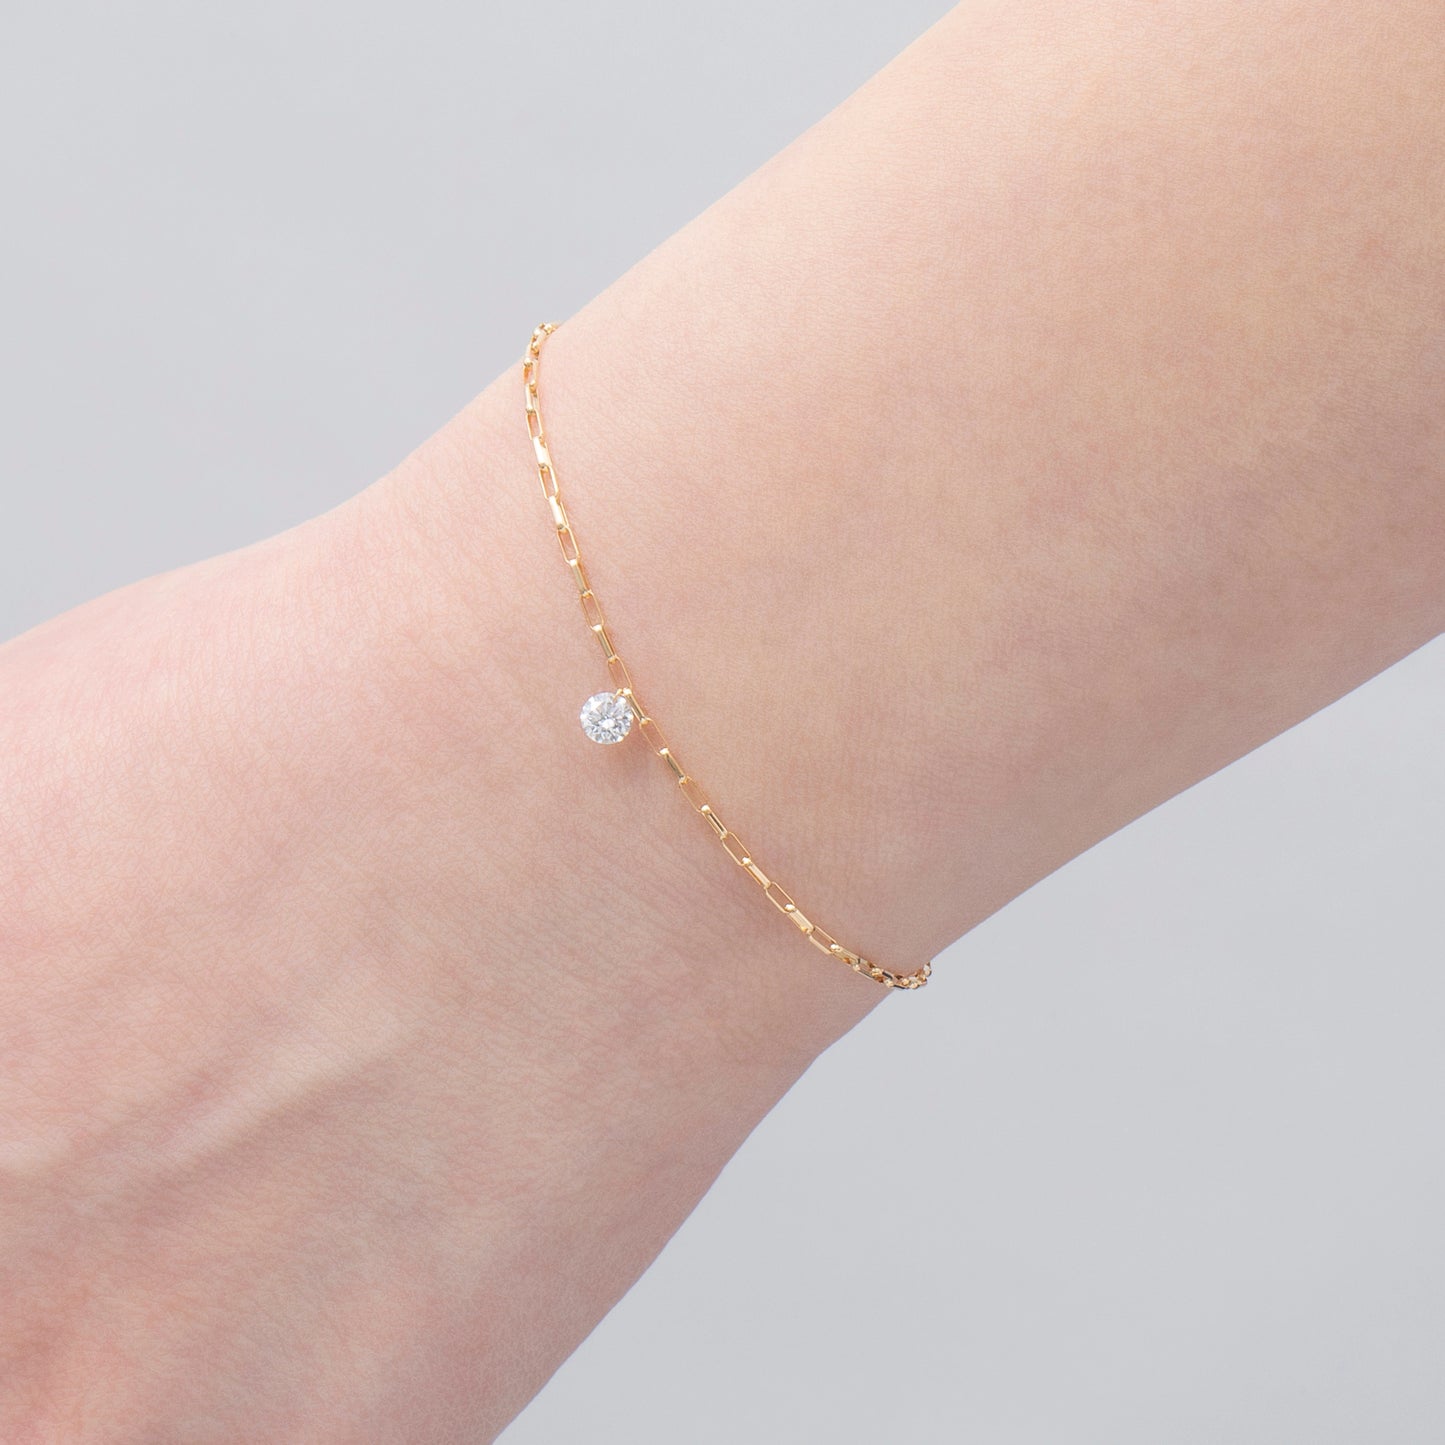 Innocence chain bracelet/ K18 yellow gold/ 0.2 carat